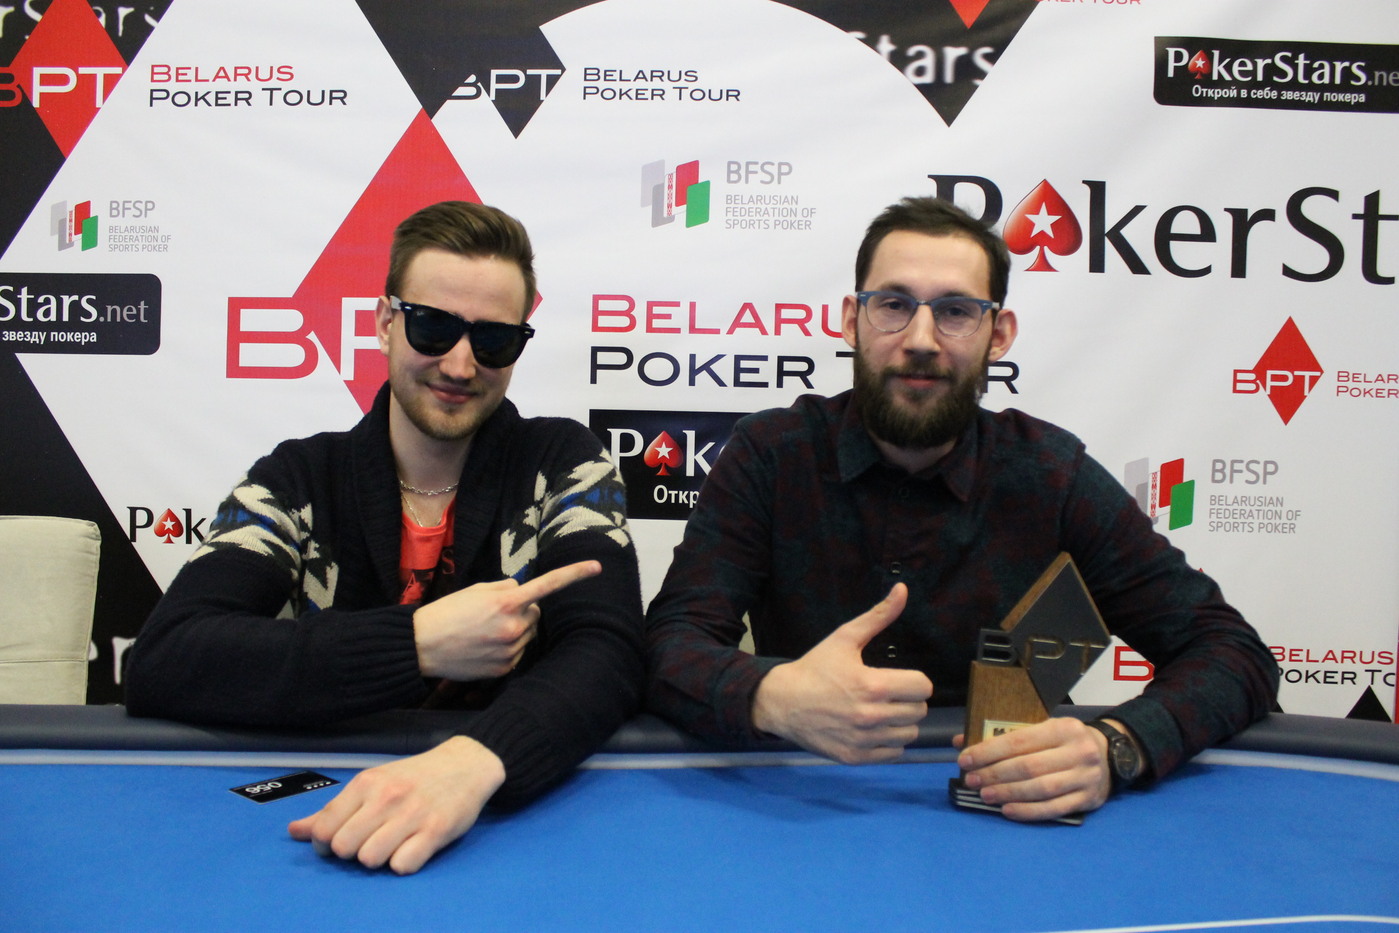 Belarus Poker Tour: Antirecession series